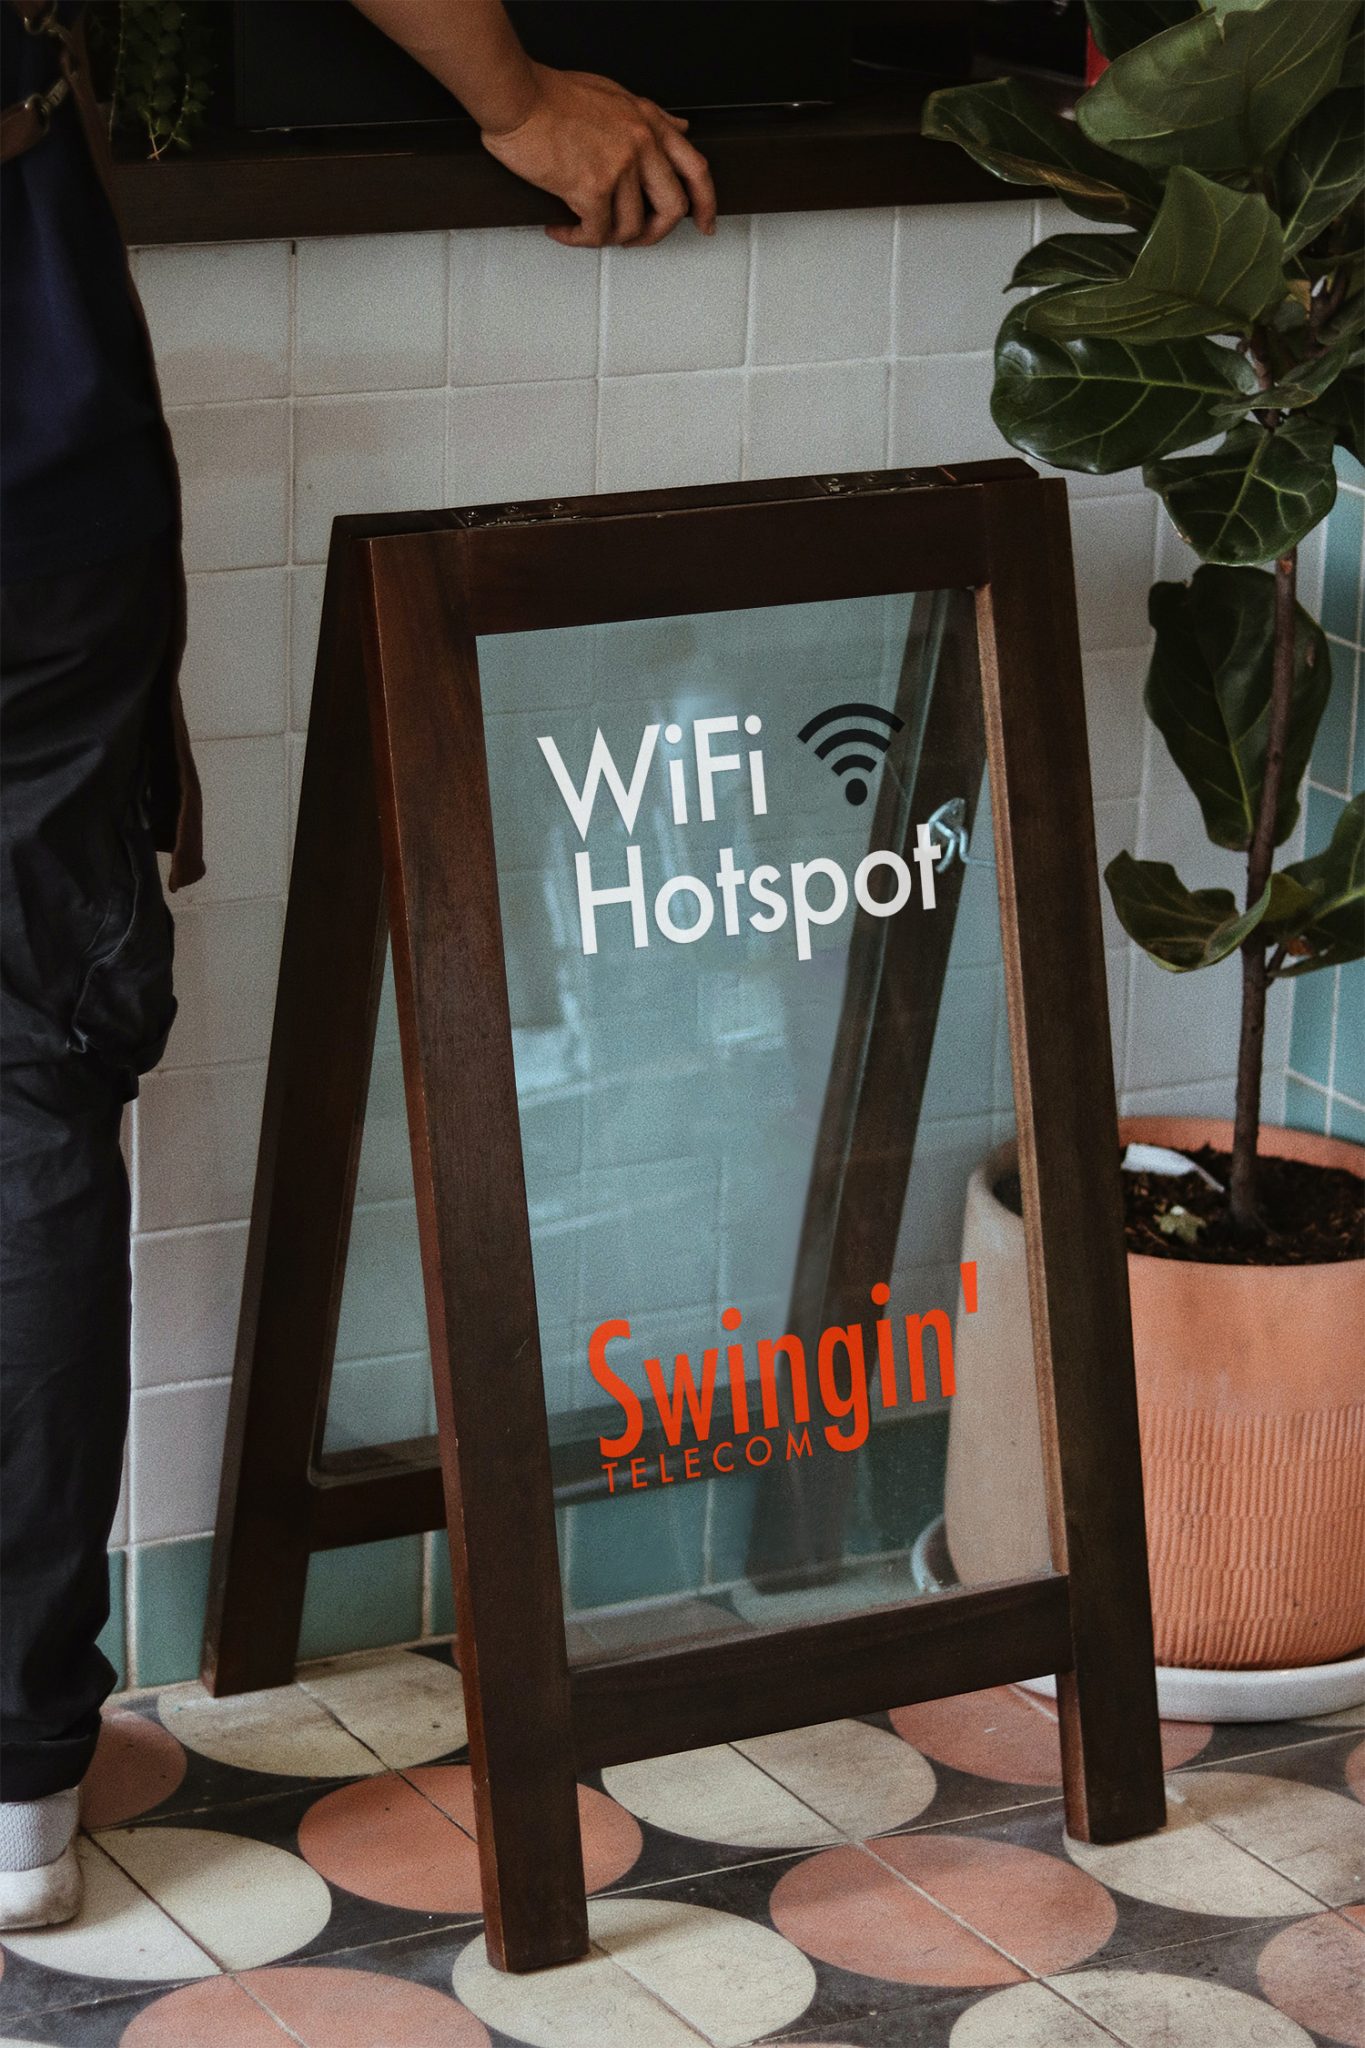 WiFi Hotspot sign, supplied by "Swingin' Telecom"